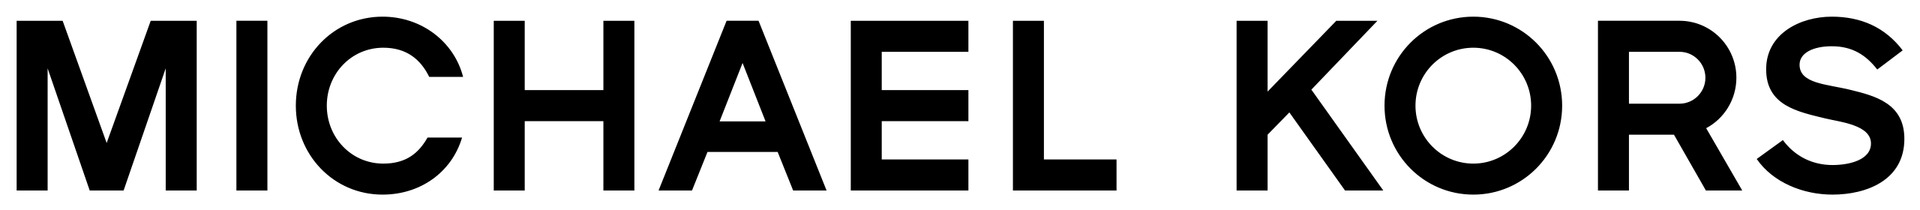 MICHAEL KORS logo. Current catalogue